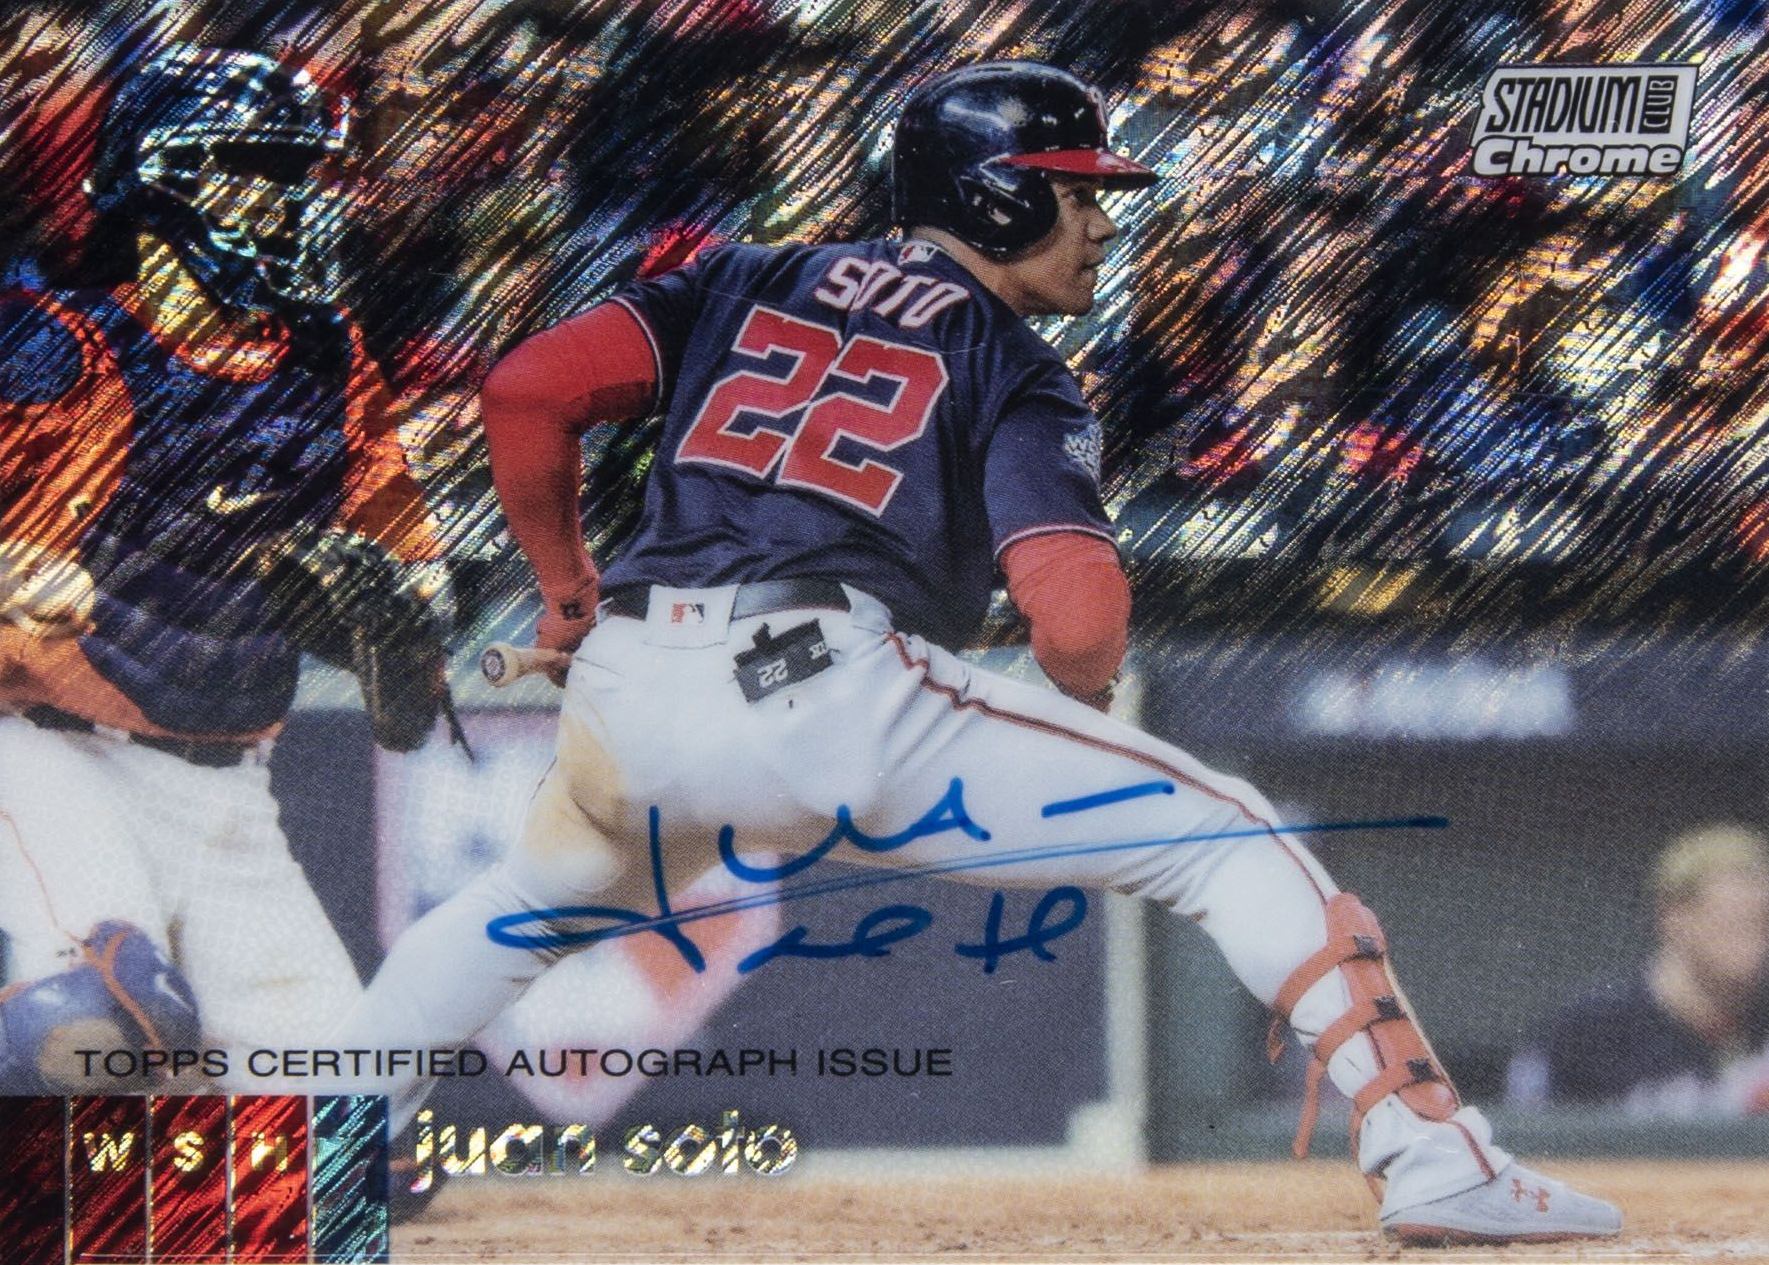 2020 Stadium Club Chrome Autographs Juan Soto #CAJS Baseball Card